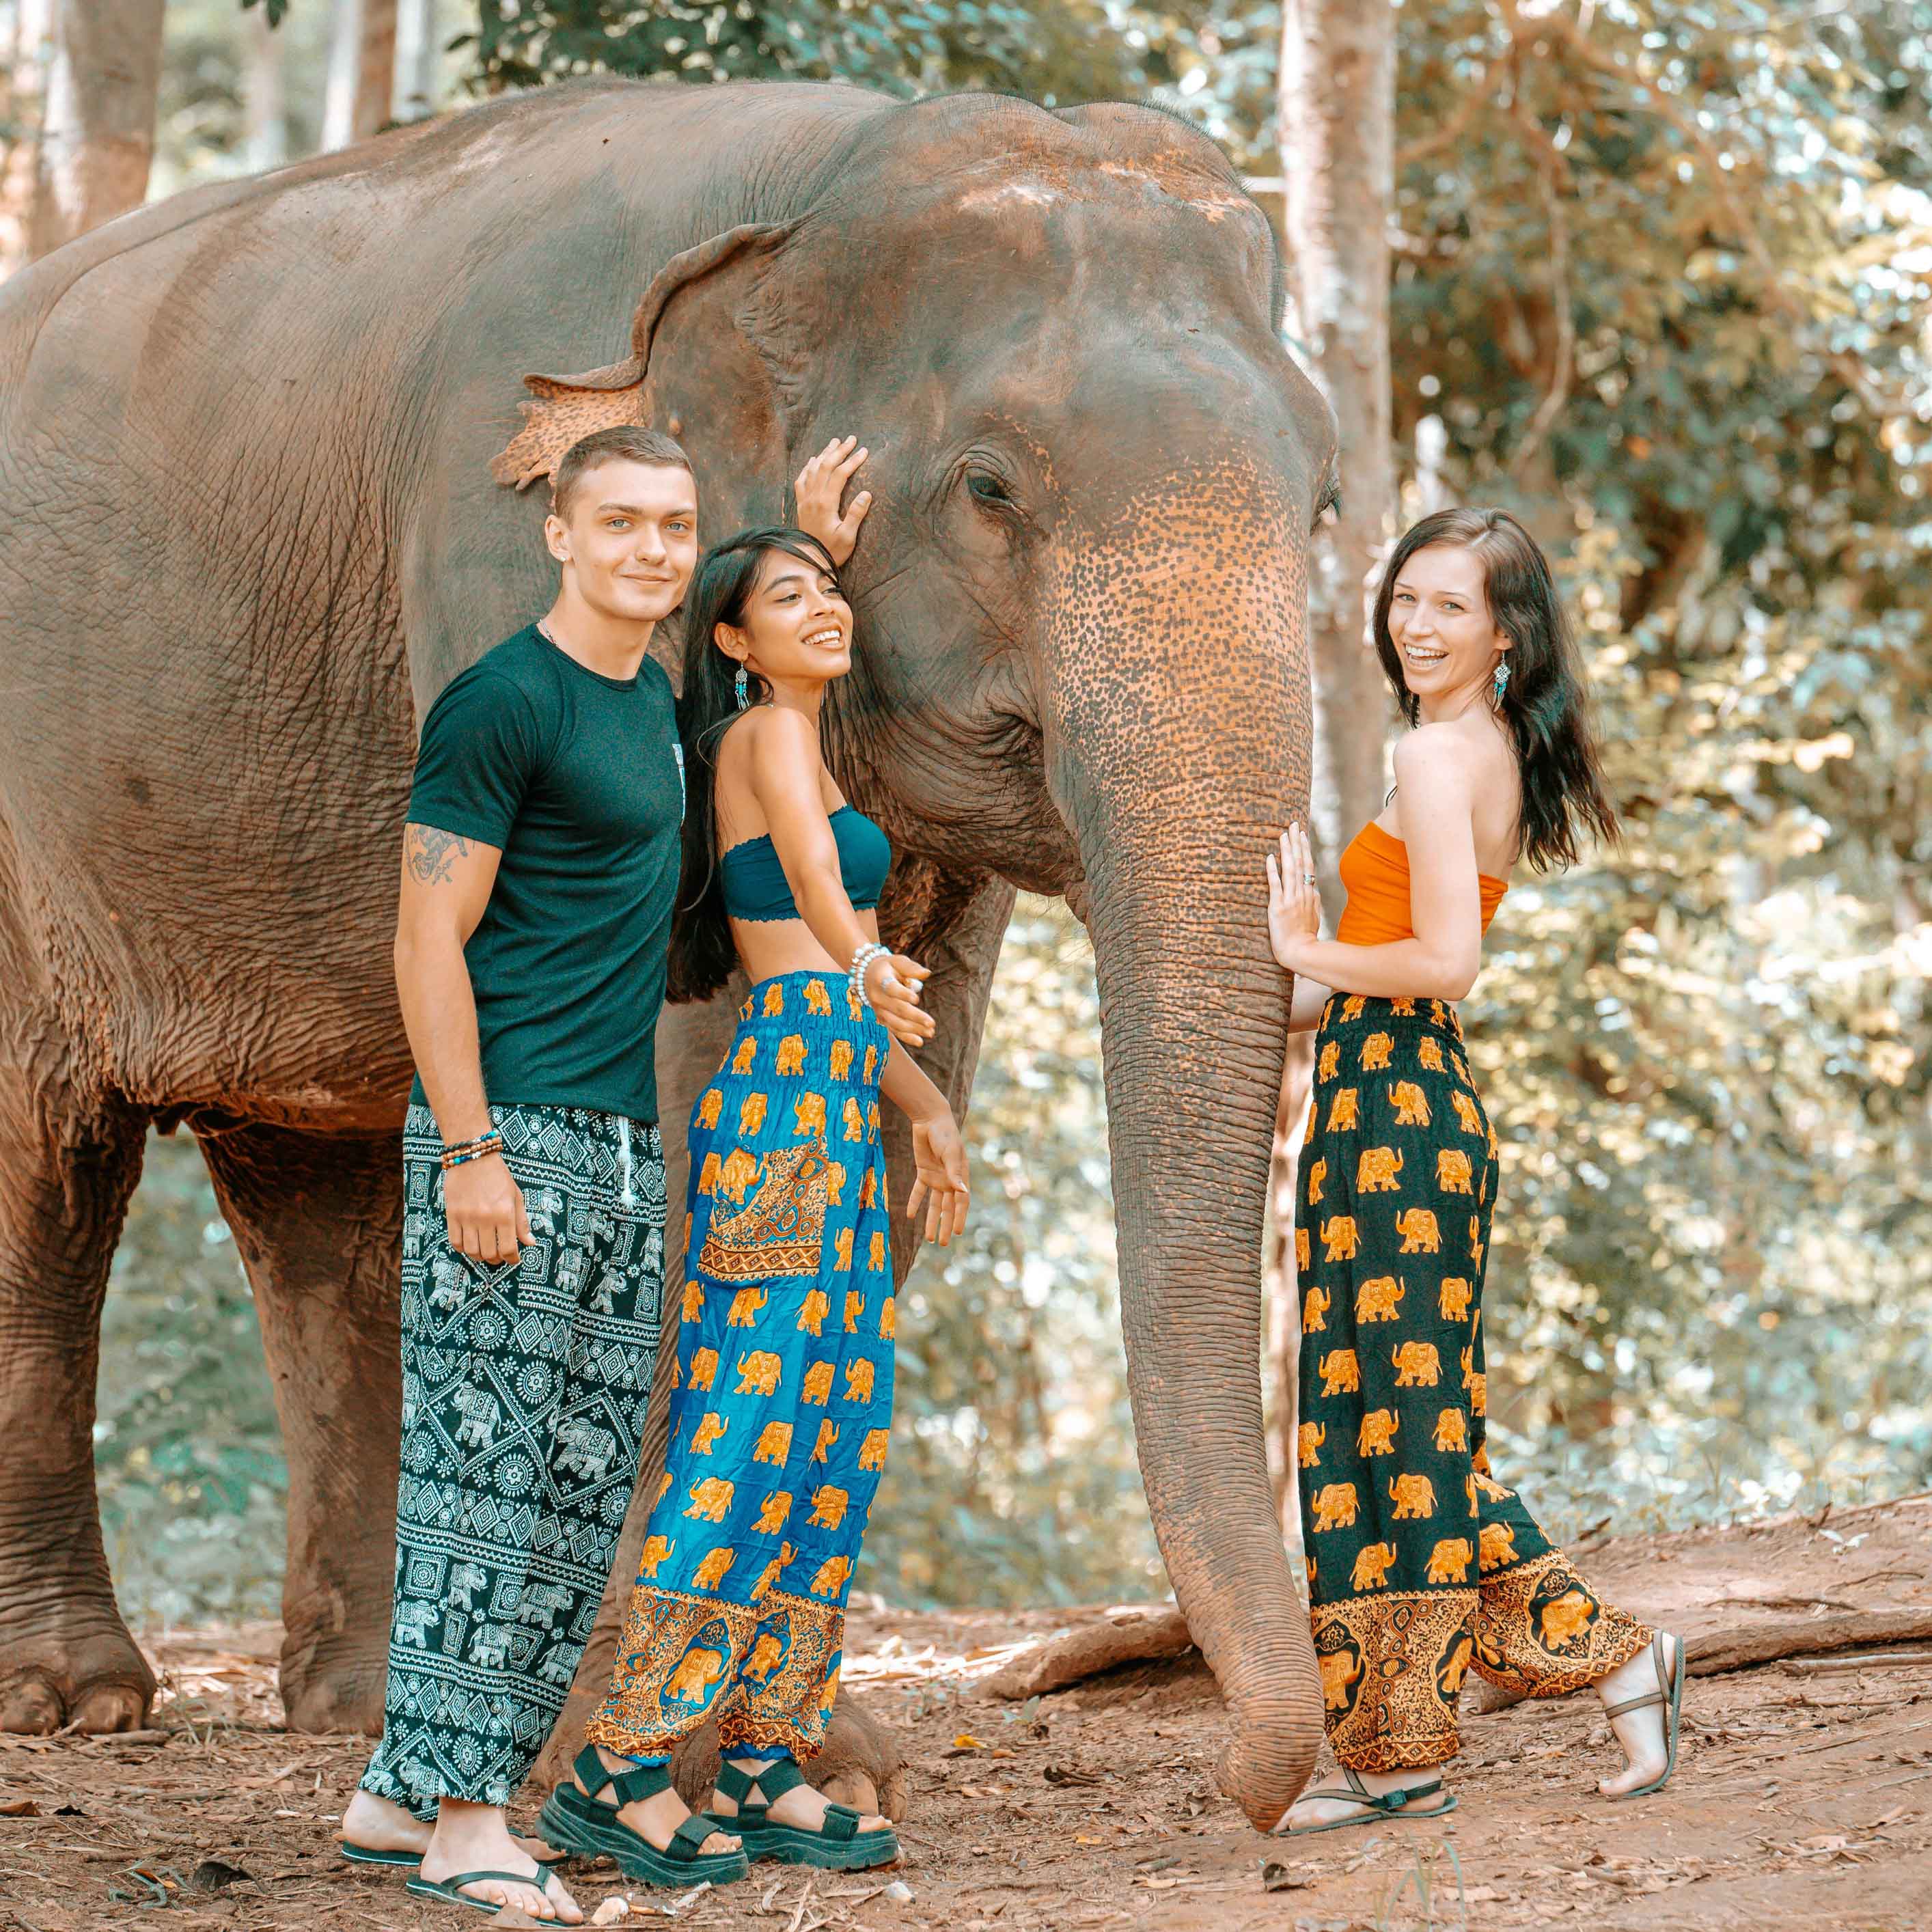 SAVANNA ELEPHANT PANTS - BLACK Elepanta Women's Pants - Buy Today Elephant Pants Jewelry And Bohemian Clothes Handmade In Thailand Help To Save The Elephants FairTrade And Vegan